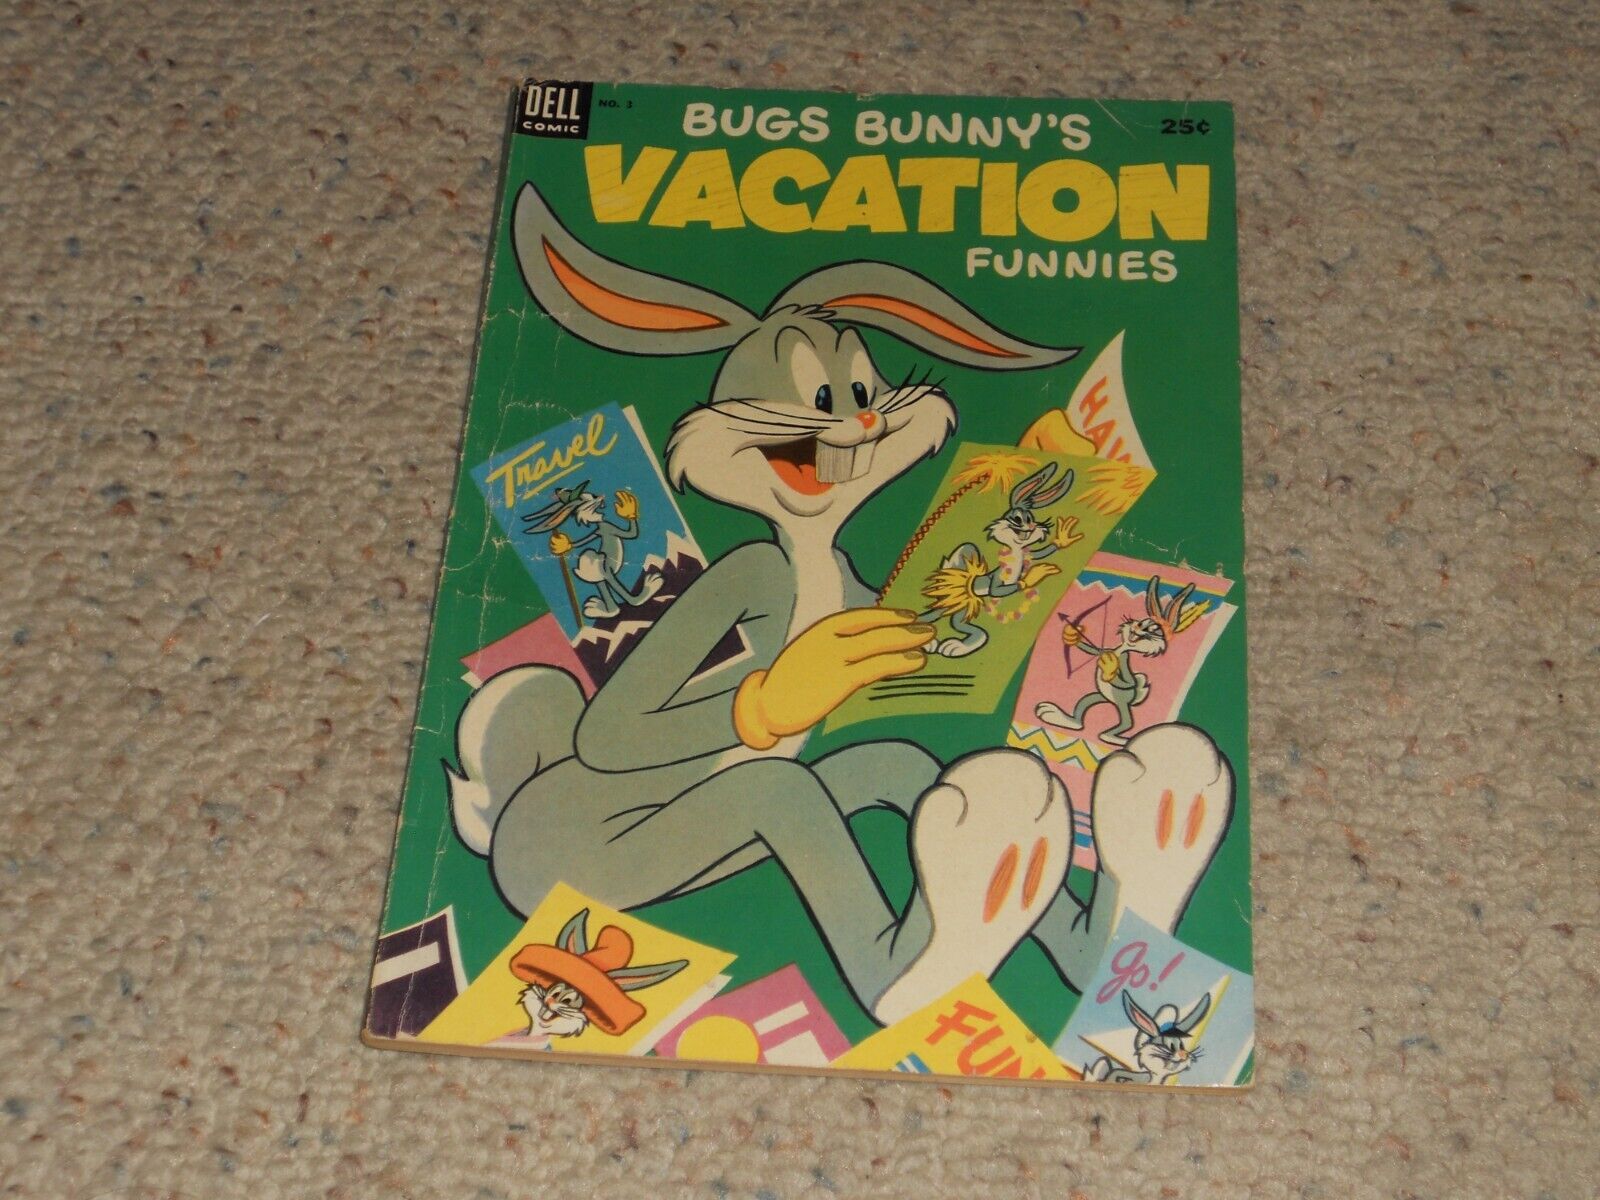 1953 Bugs Bunny's Vacation Funnies Dell Giant Comic Book #3 - BUNGLING BUCKAROOS